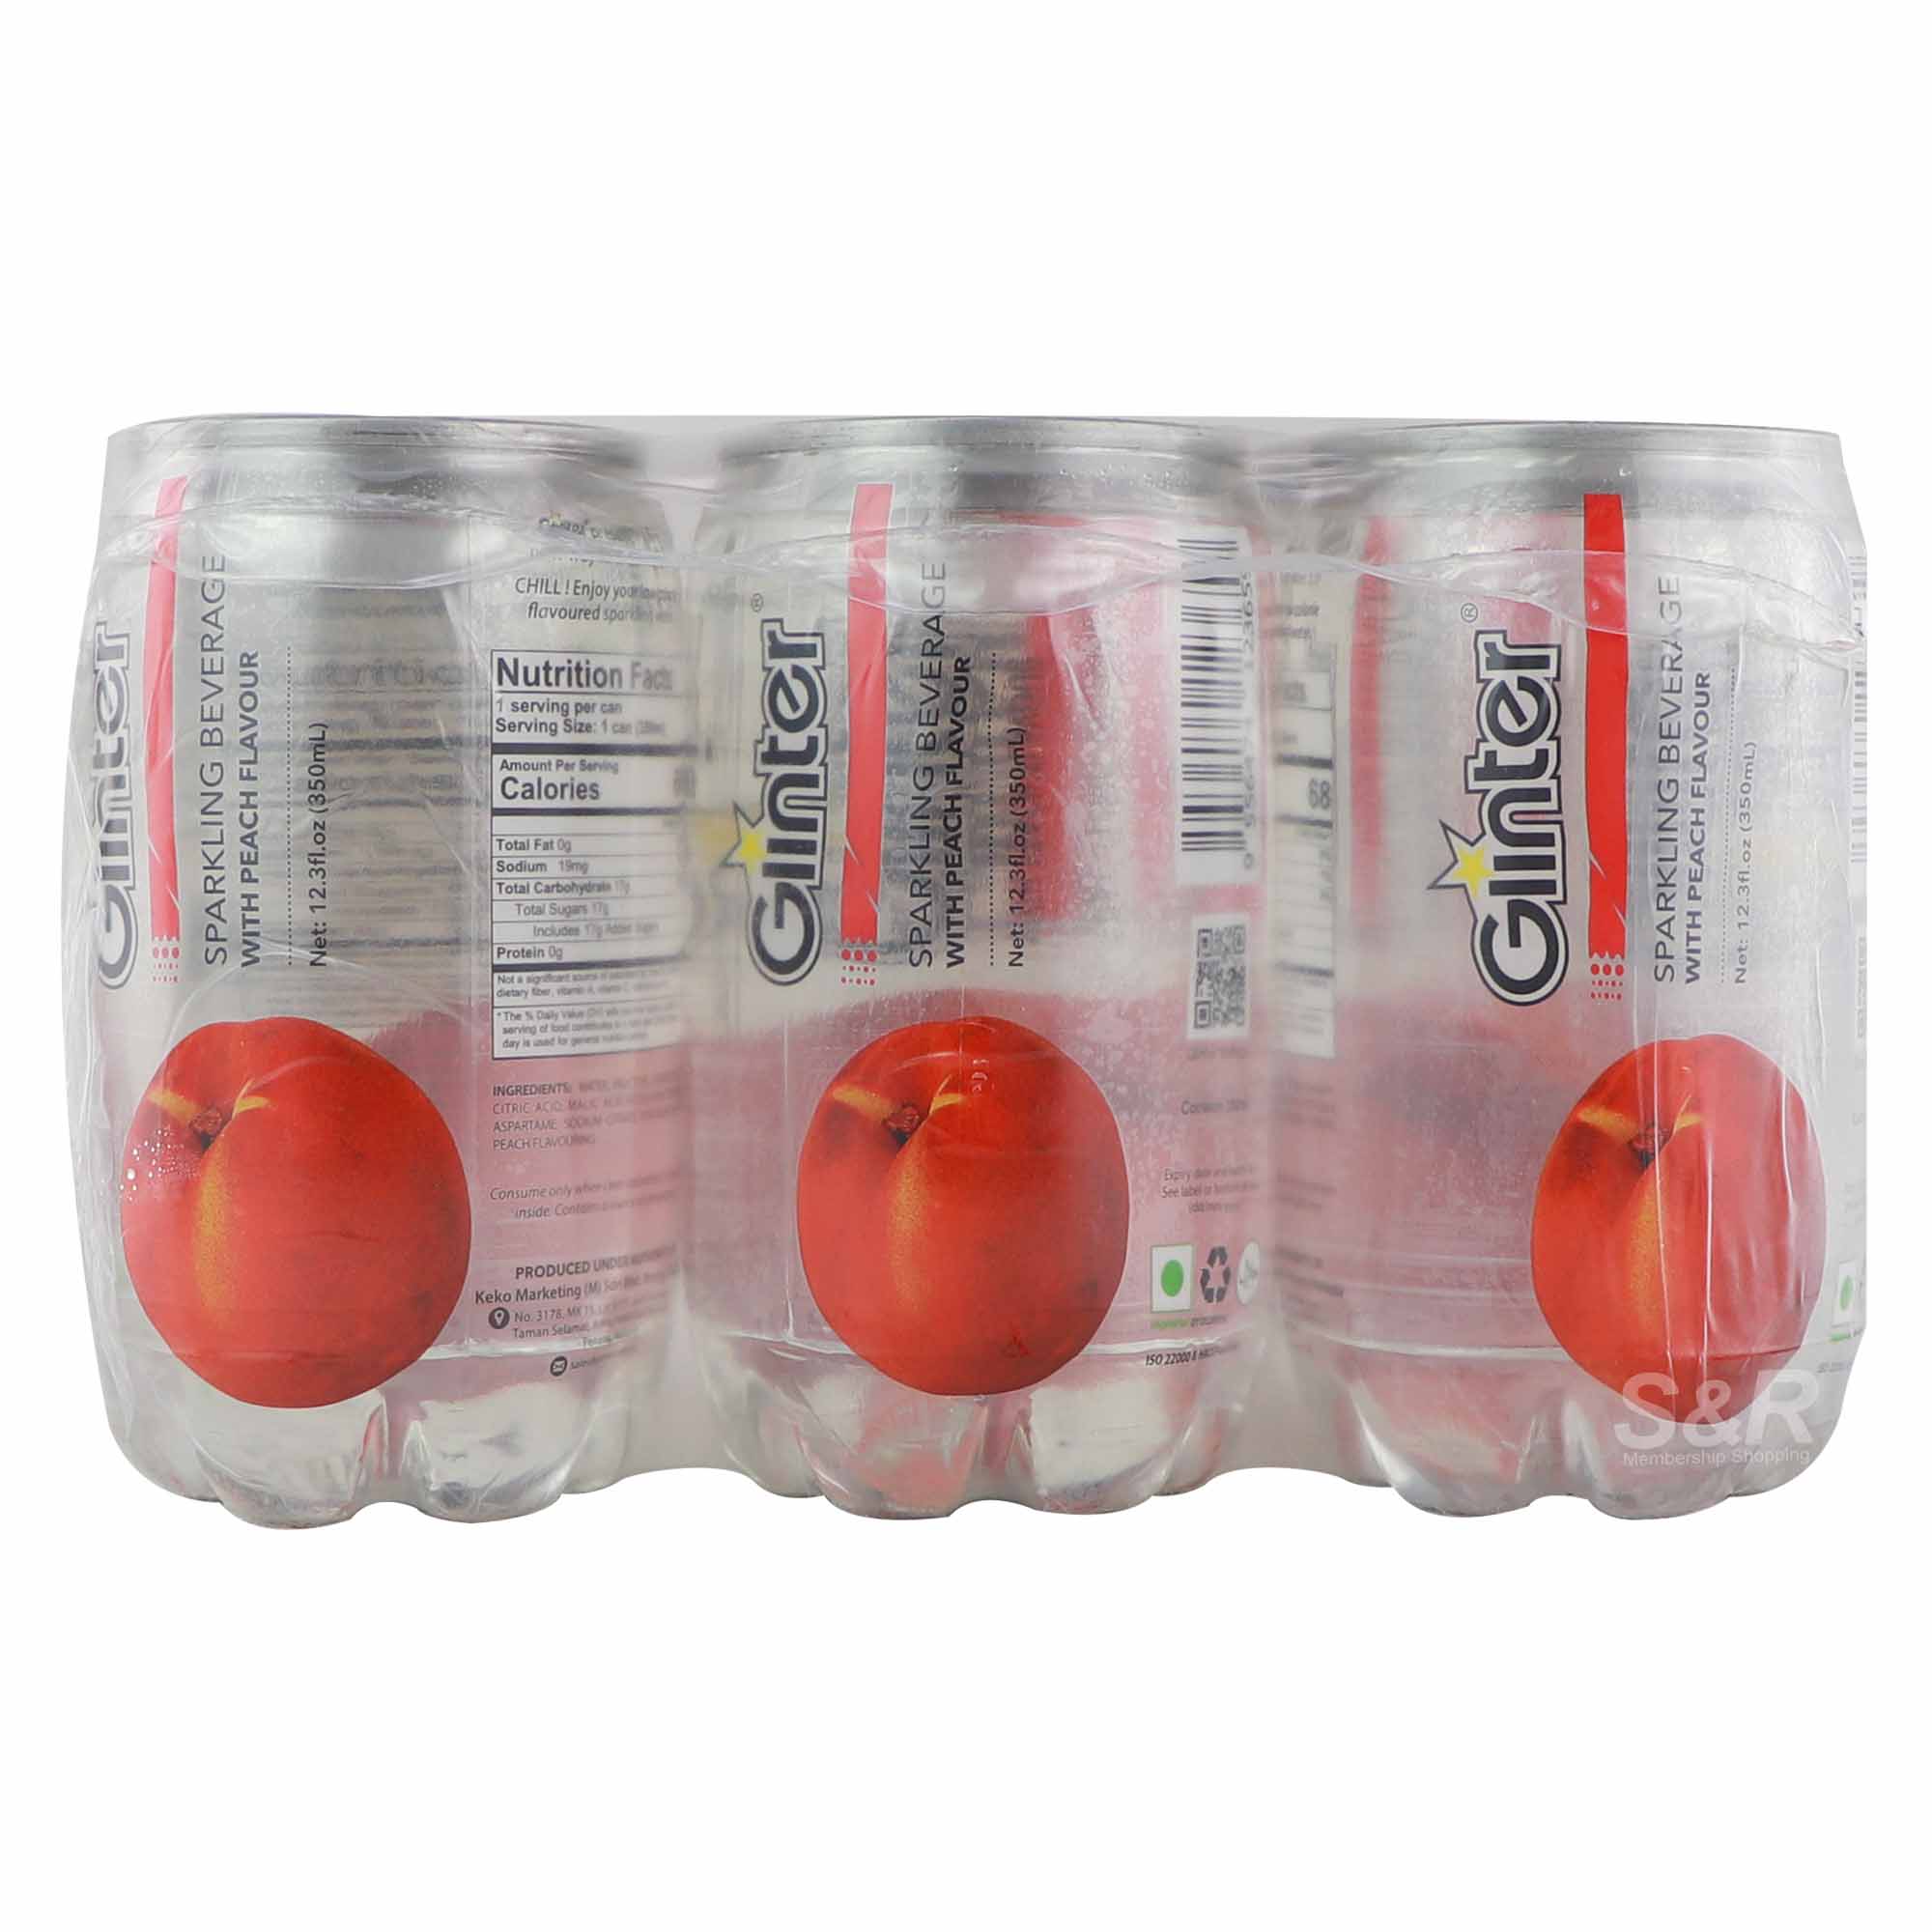 Glinter Sparkling Beverage with Peach Flavor 6 cans